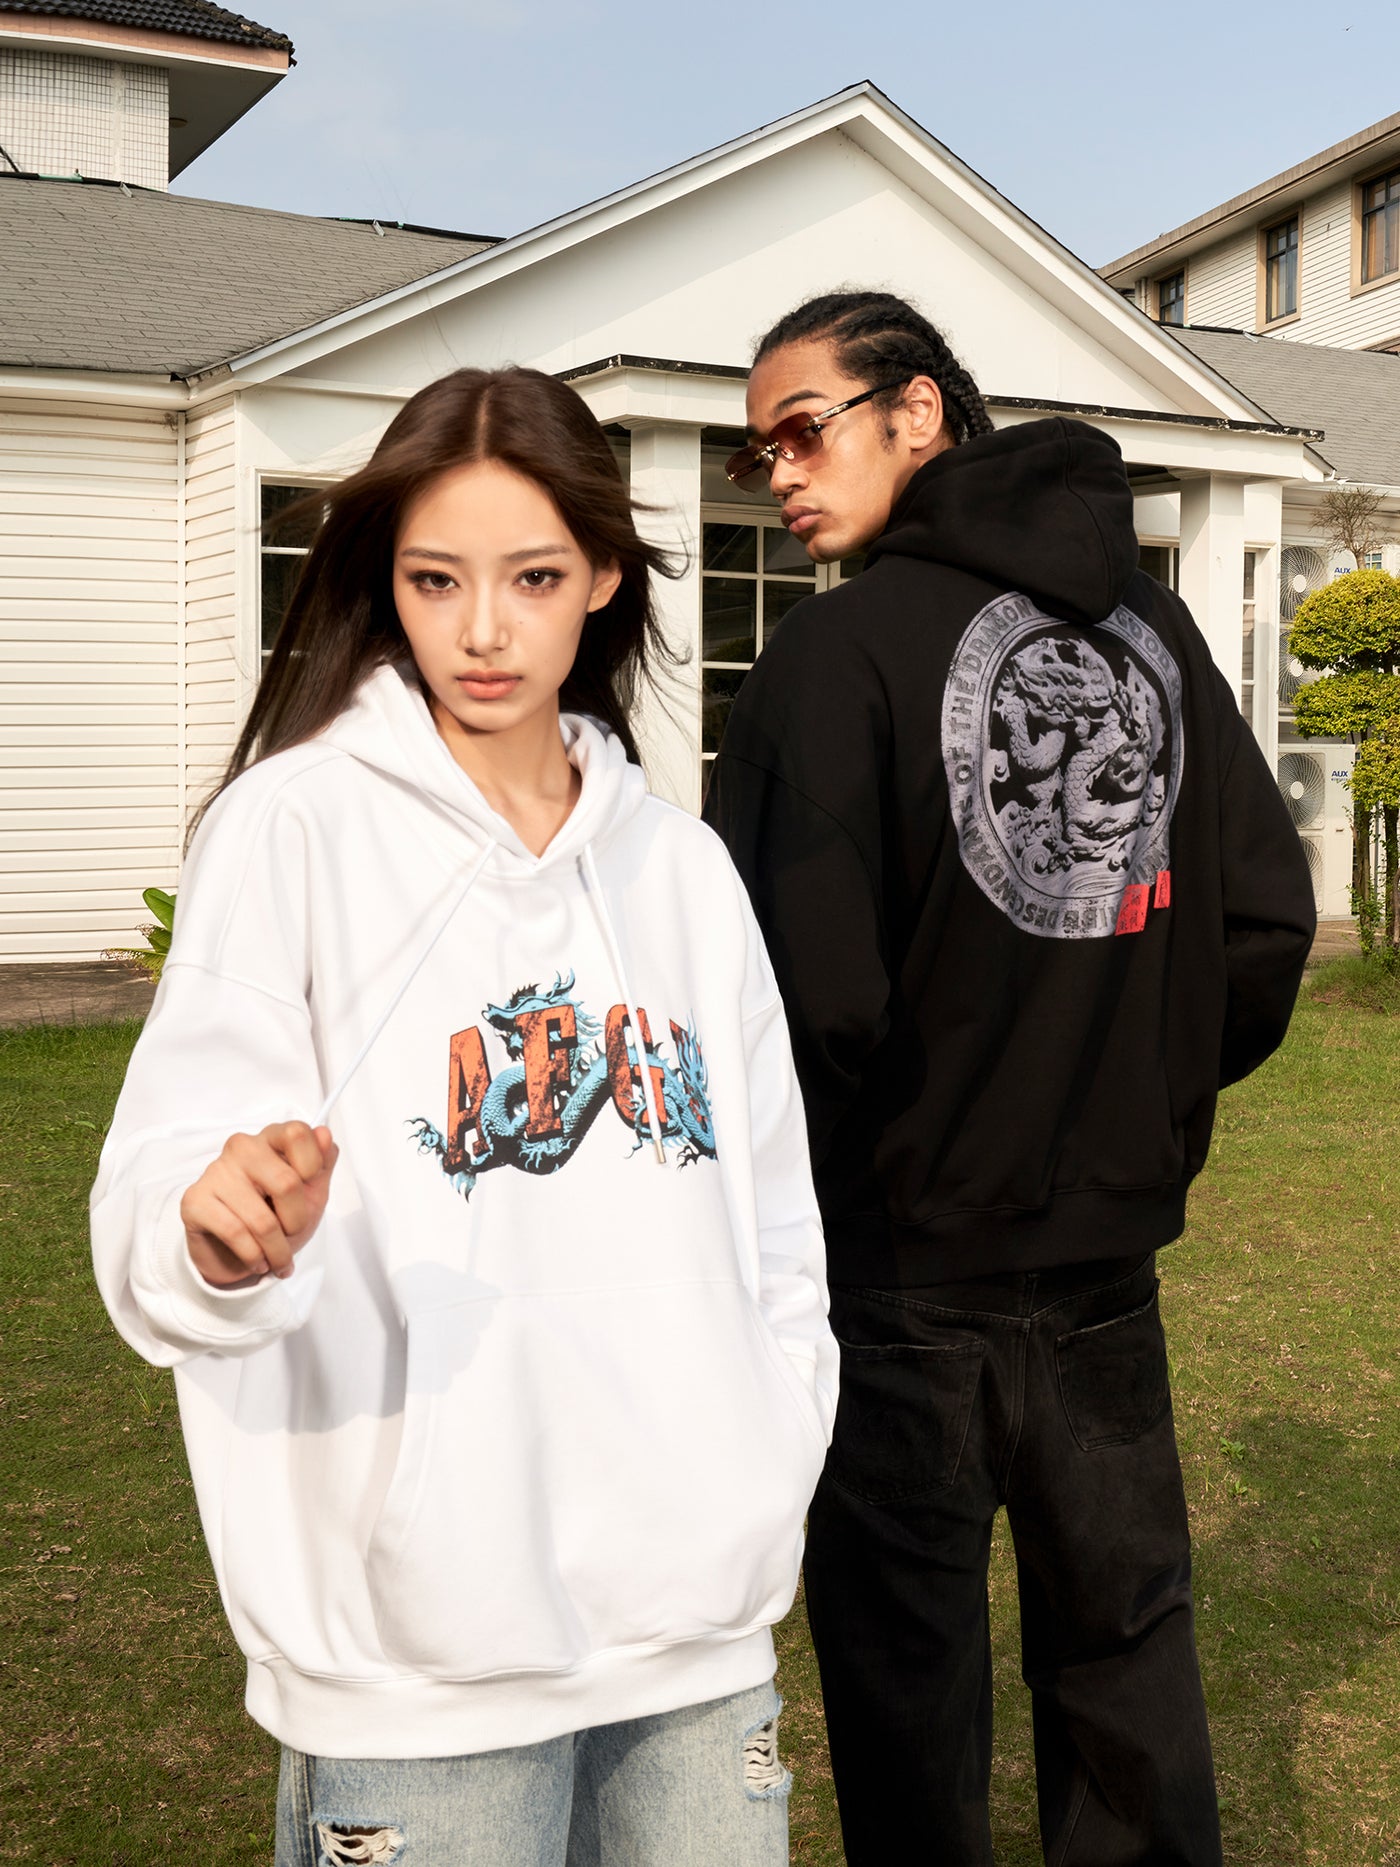 DONCARE(AFGK) “Dragon logo hoodie”